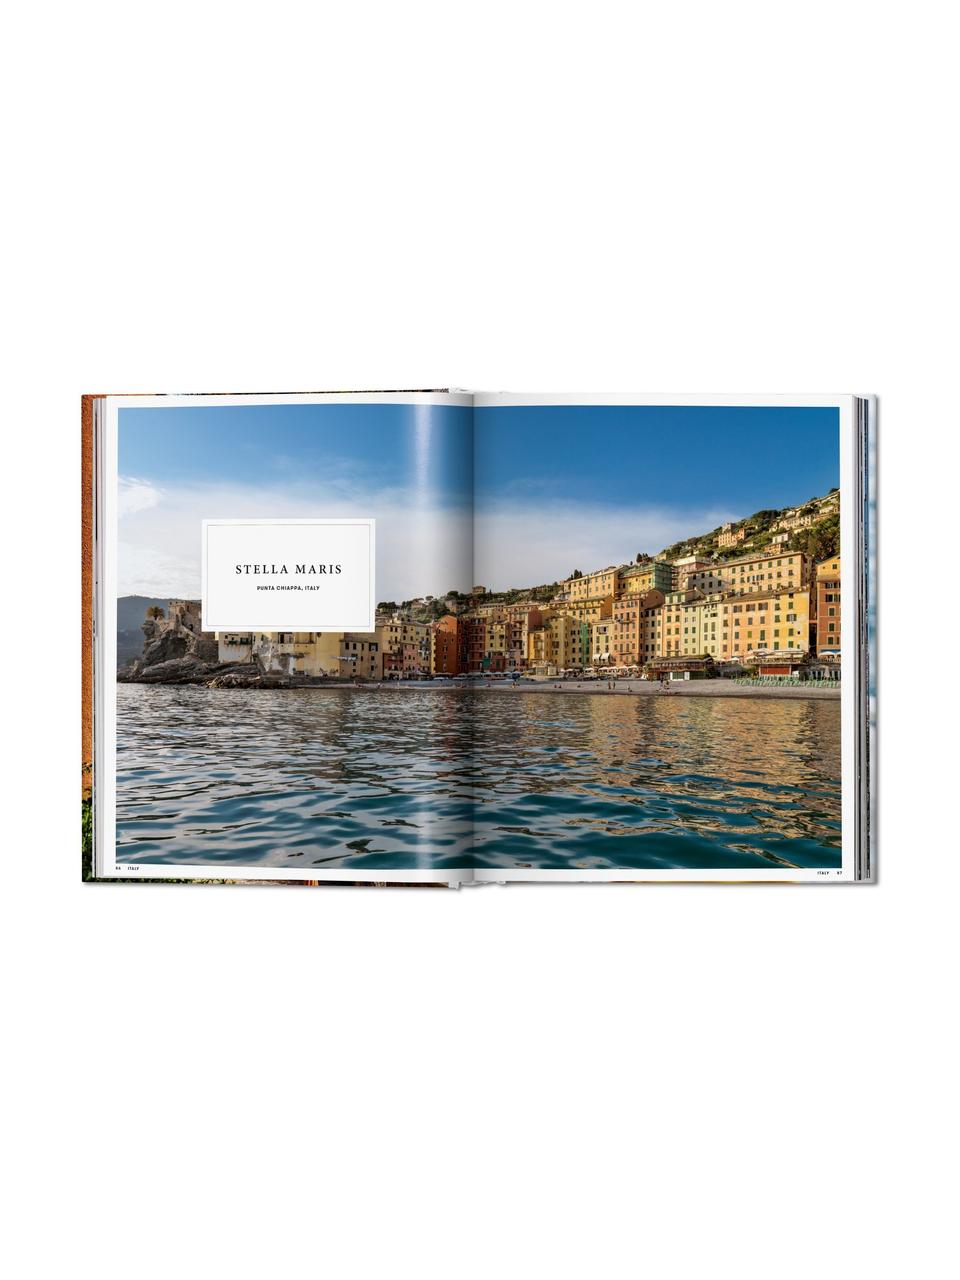 Album Great Escapes Mediterranean, Papier, twarda okładka, Klimat śródziemnomorski, S 24 x D 31 cm